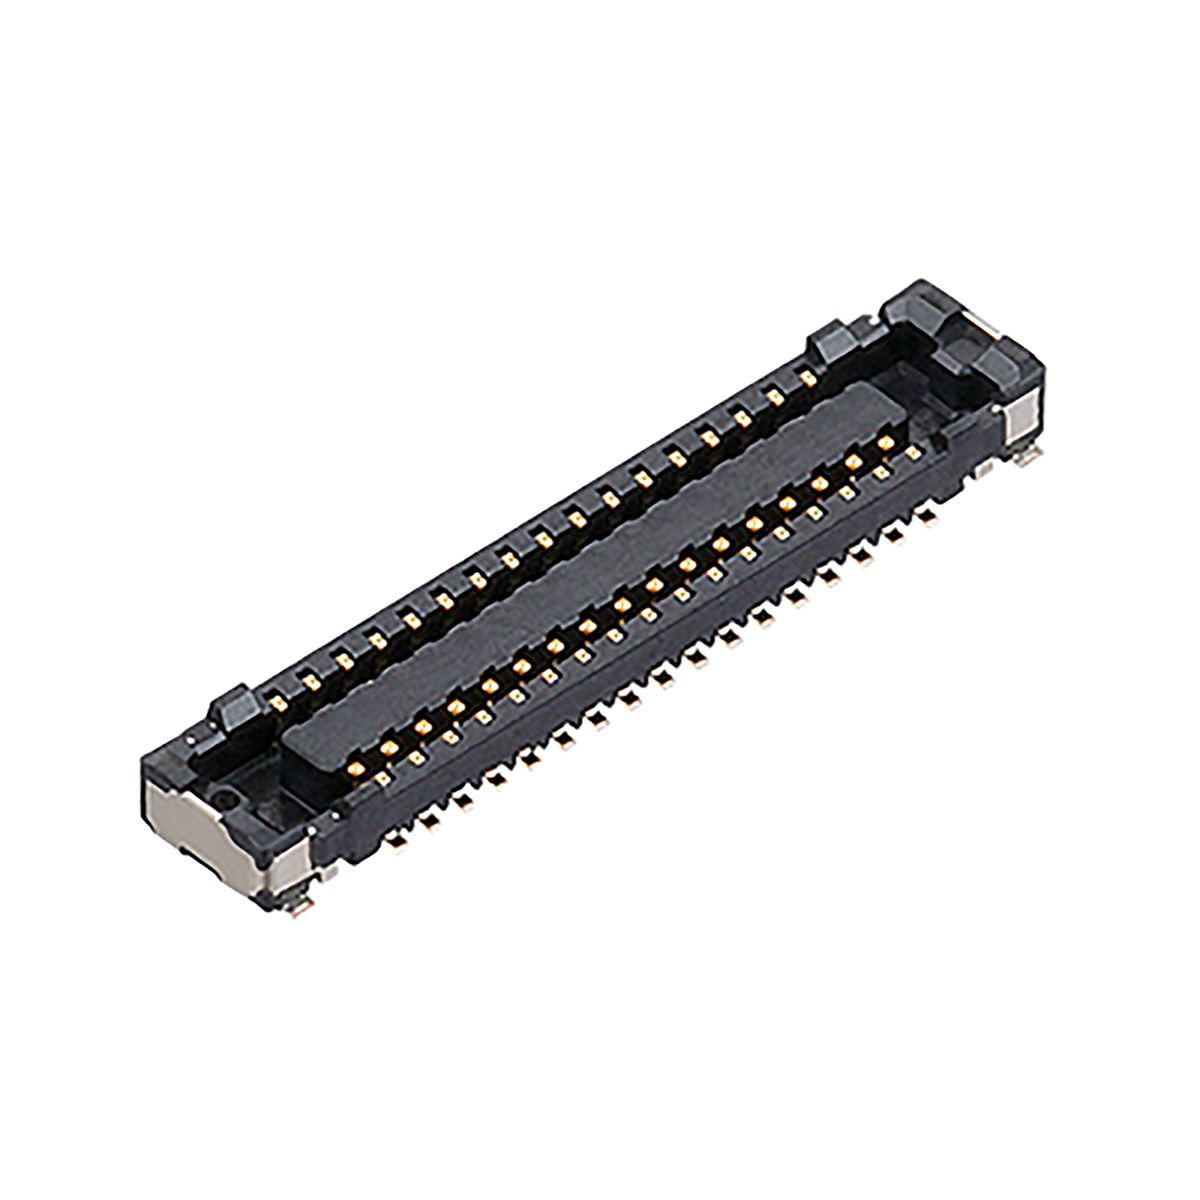 Conector hembra para PCB Panasonic serie S35, de 60 vías en 2 filas, paso 0.35mm, 60 V, 12A, Montaje Superficial, para